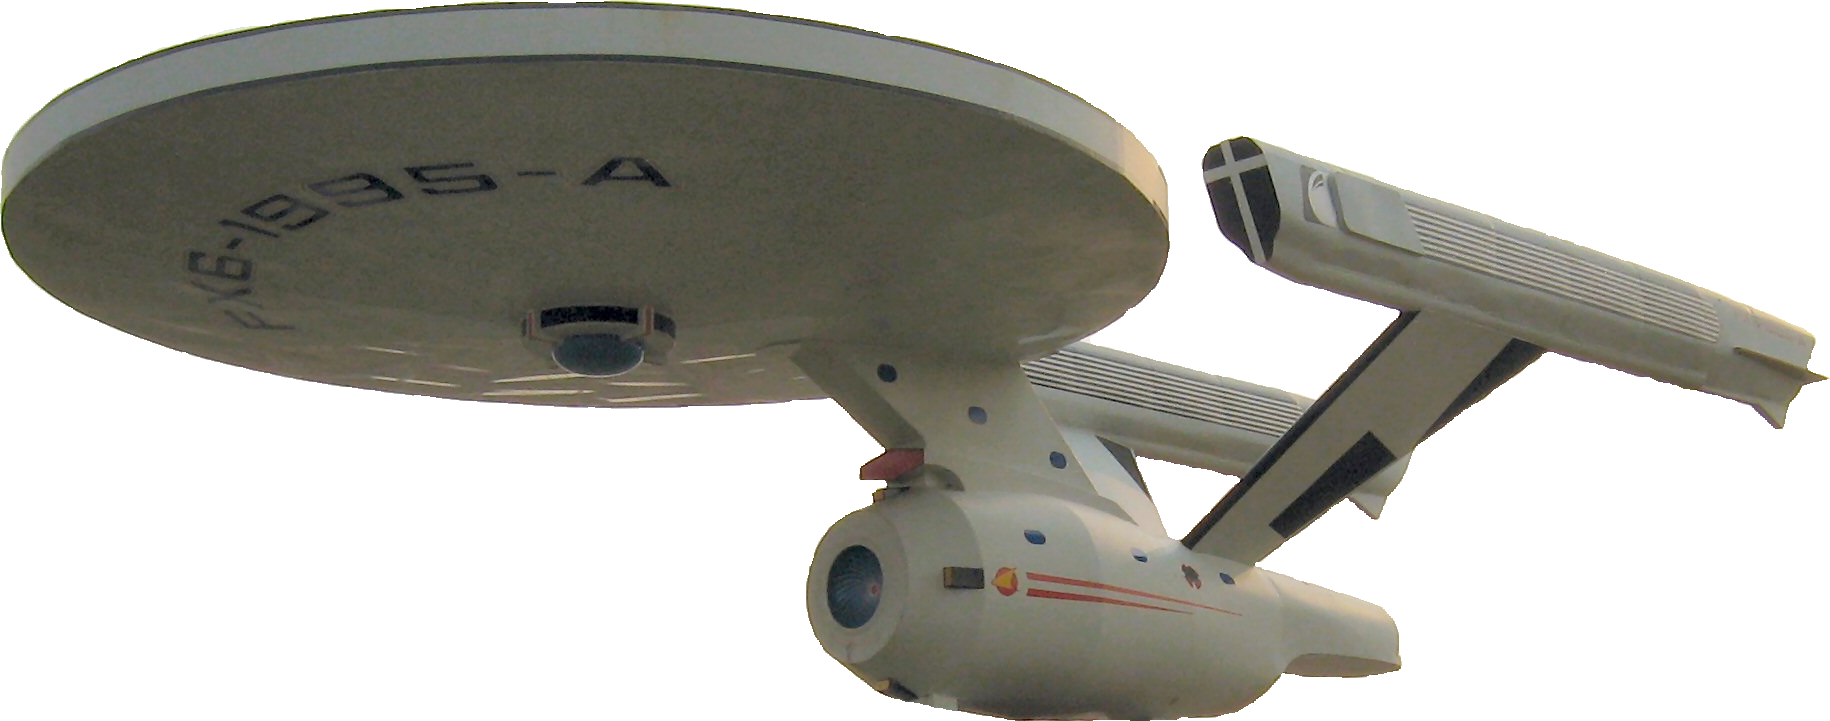 Star Trek Enterprise NCC-1701